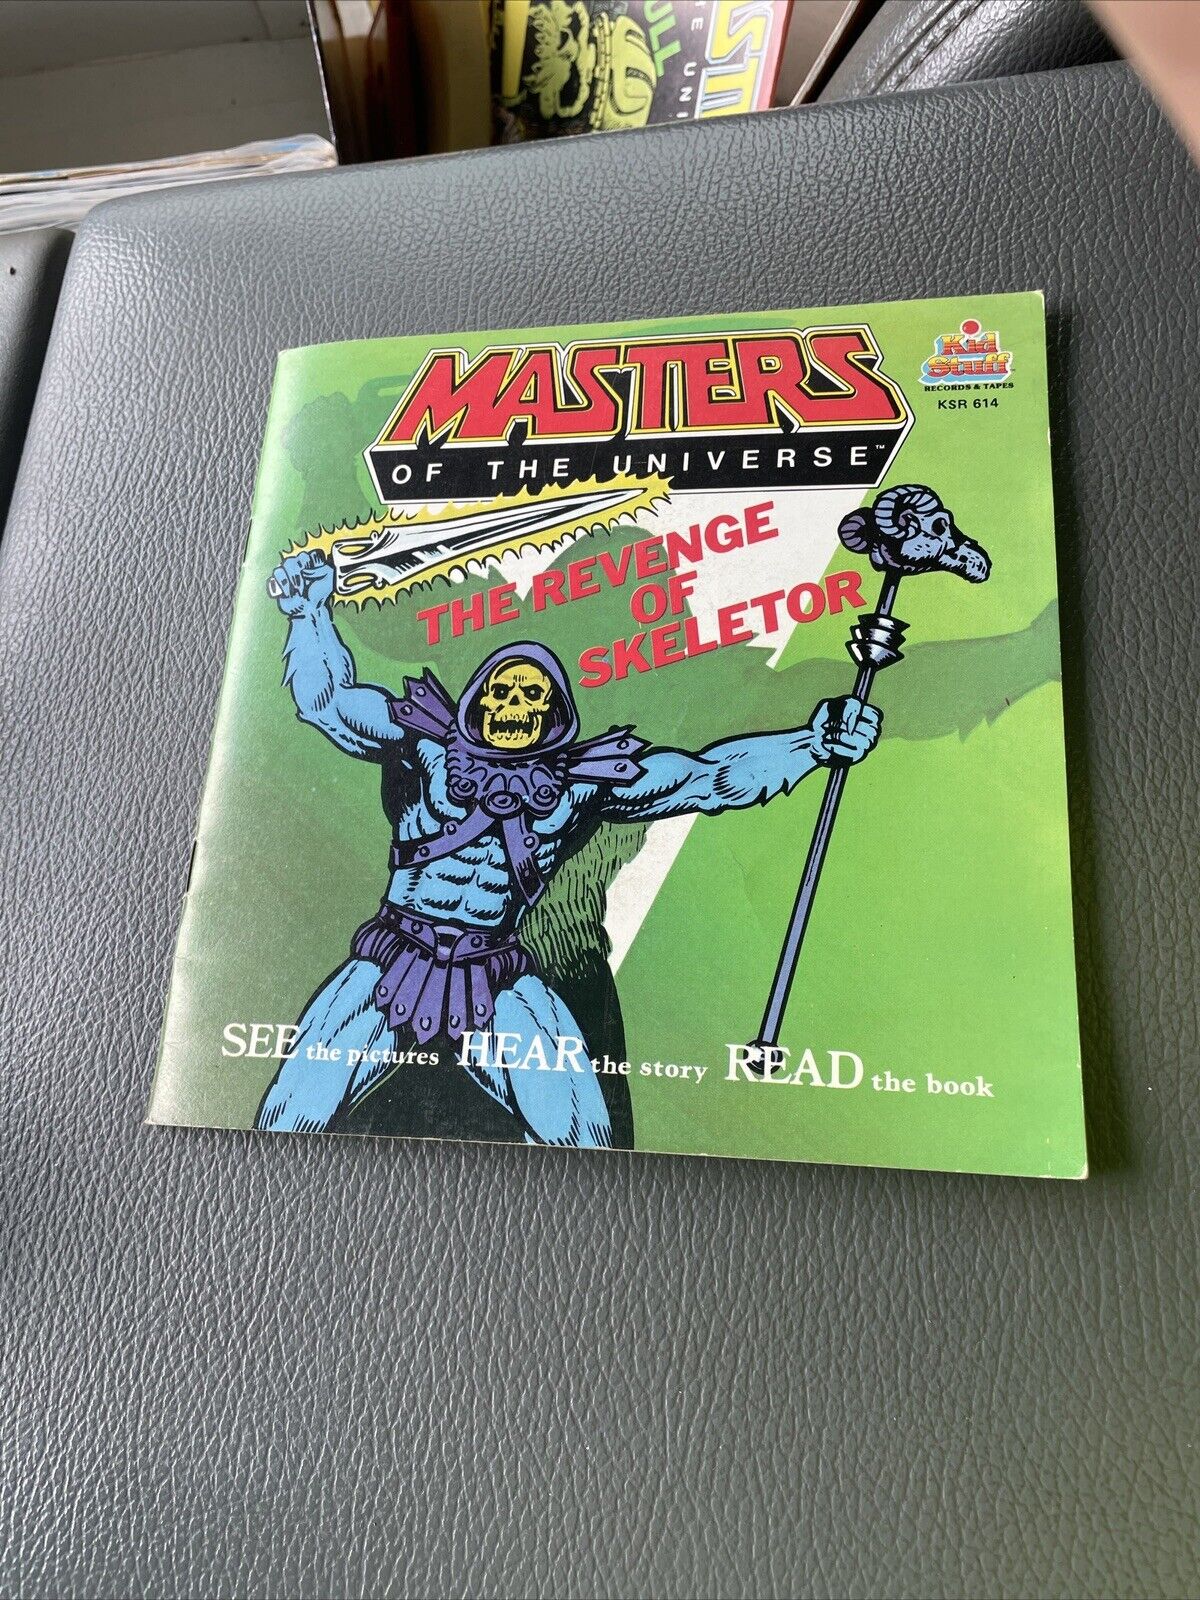 VTG 1983 Masters of the Universe The Revenge of Skeletor Book & Record 45 80’s